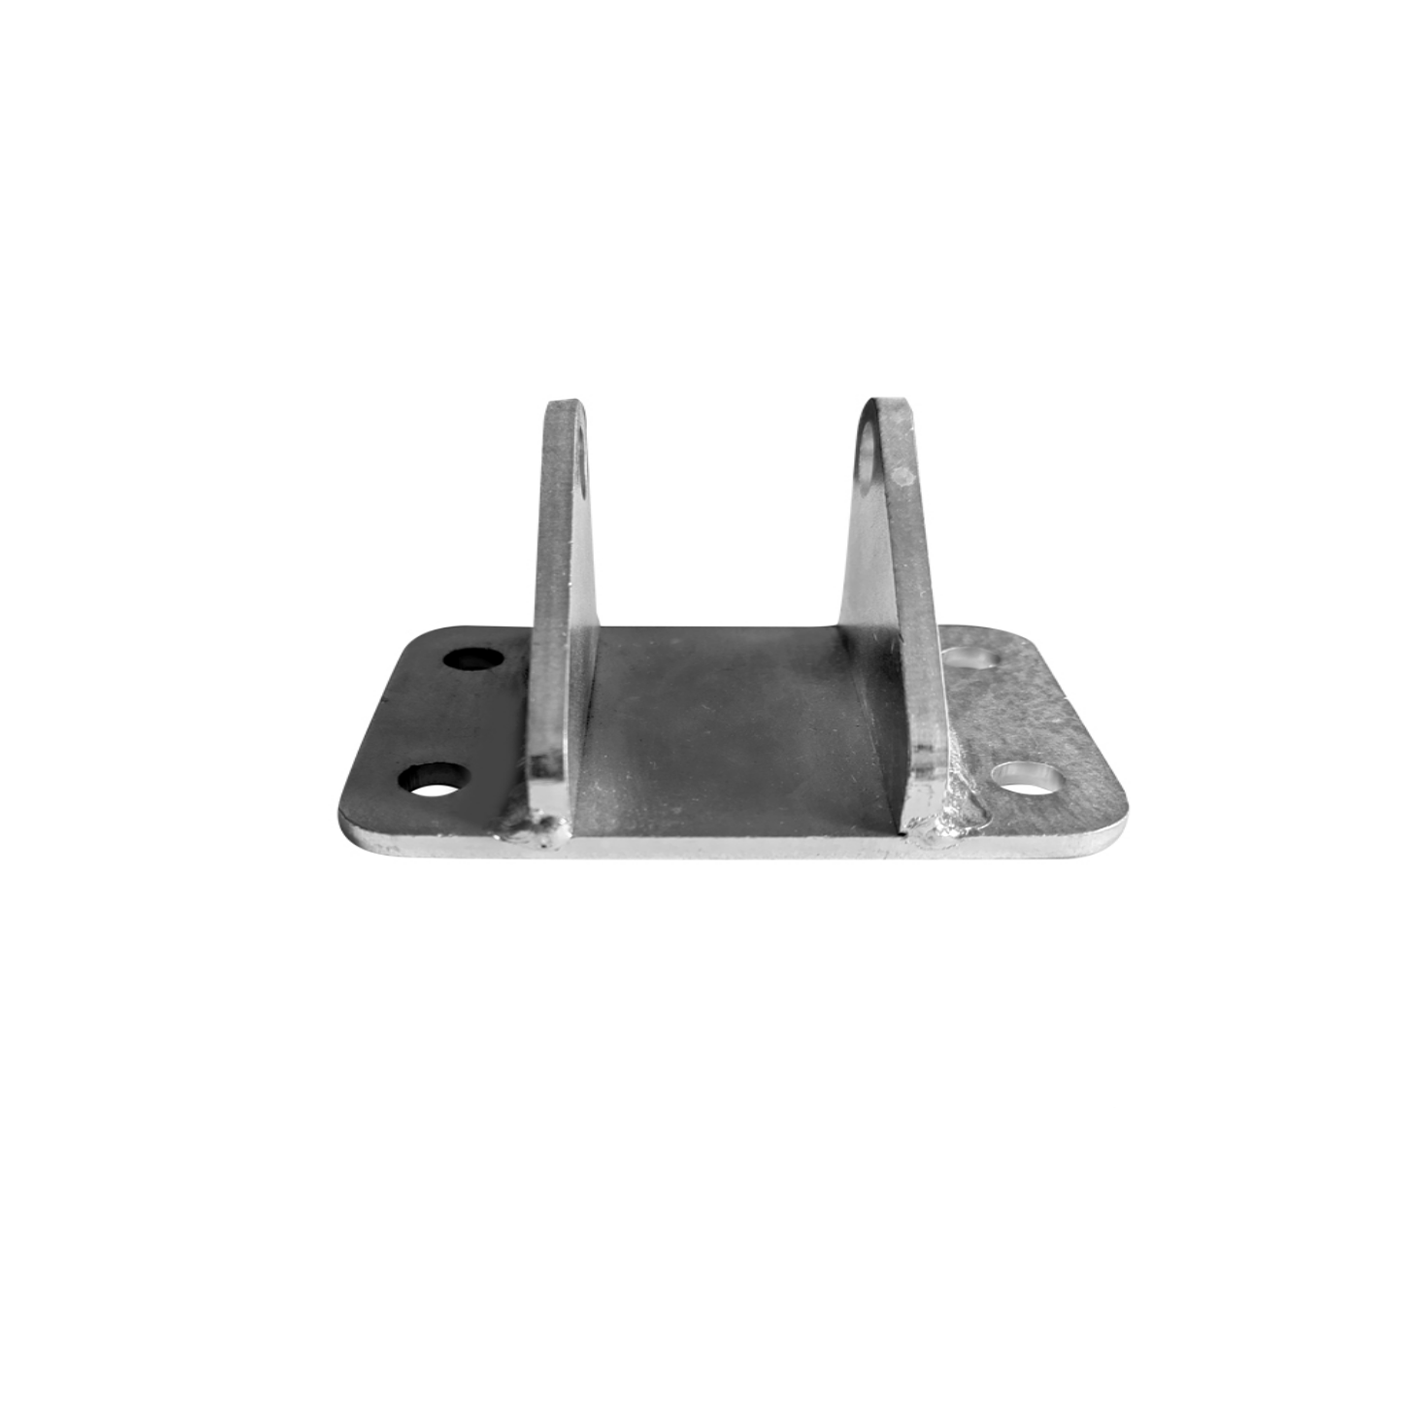 Custom high strength Metal stamped welding bracket